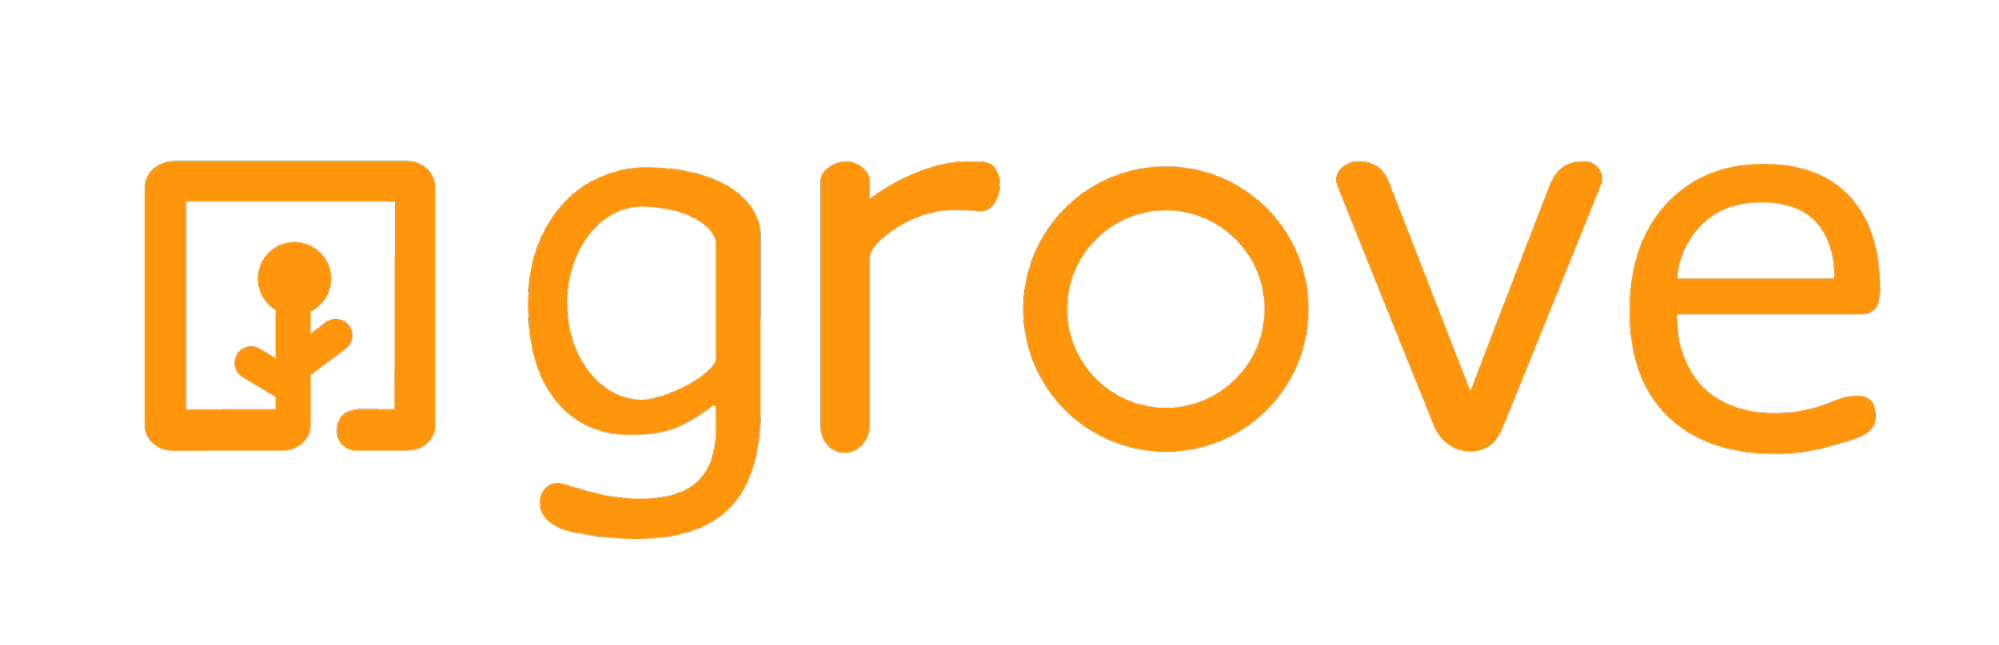 Grove Logo - Grove